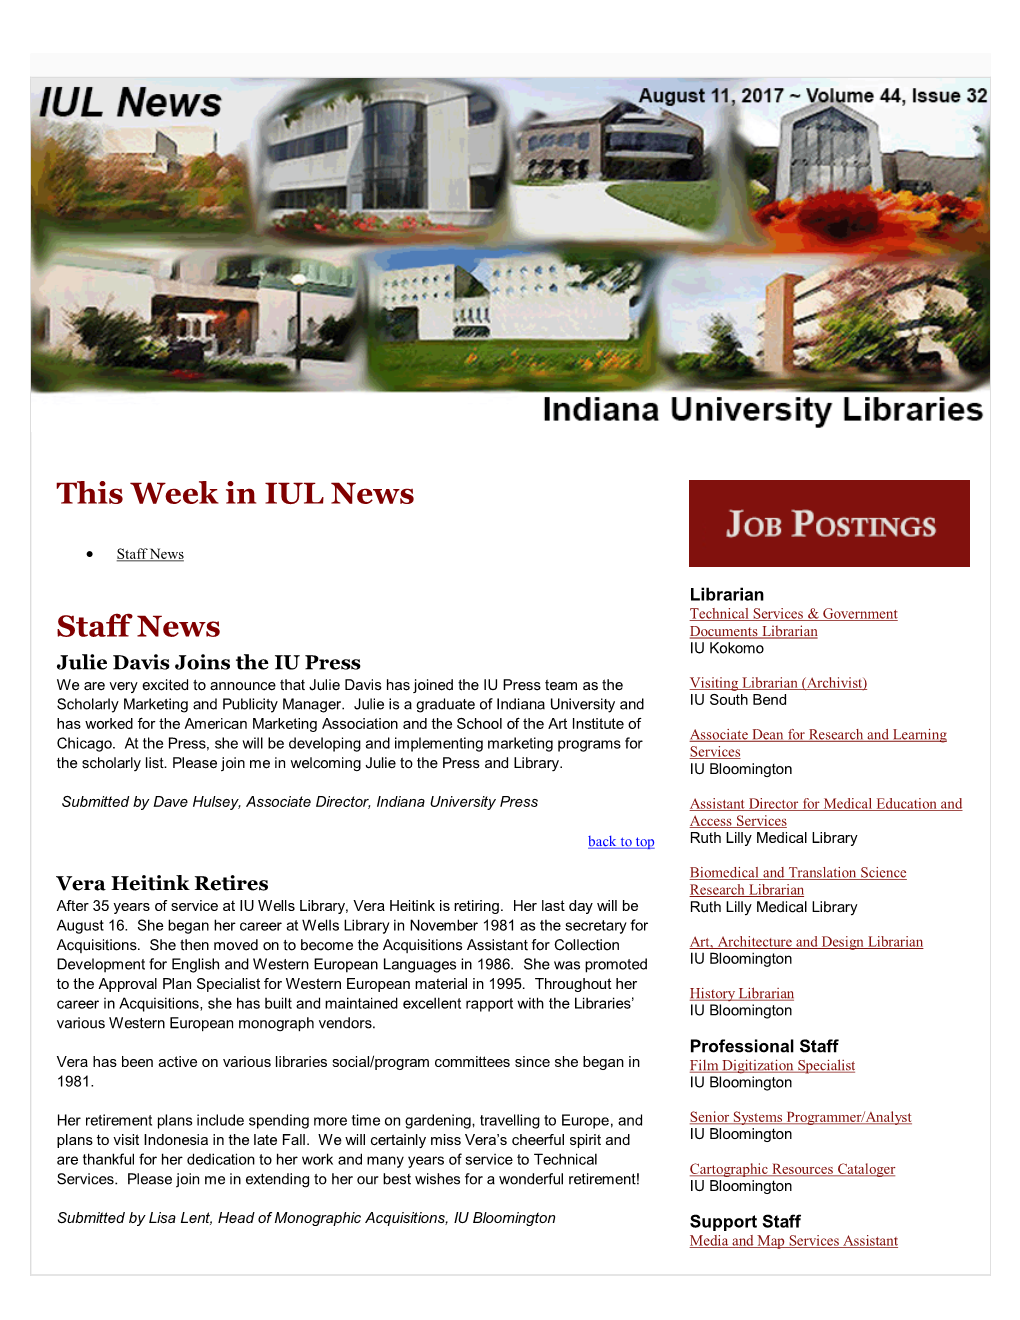 This Week in IUL News Staff News